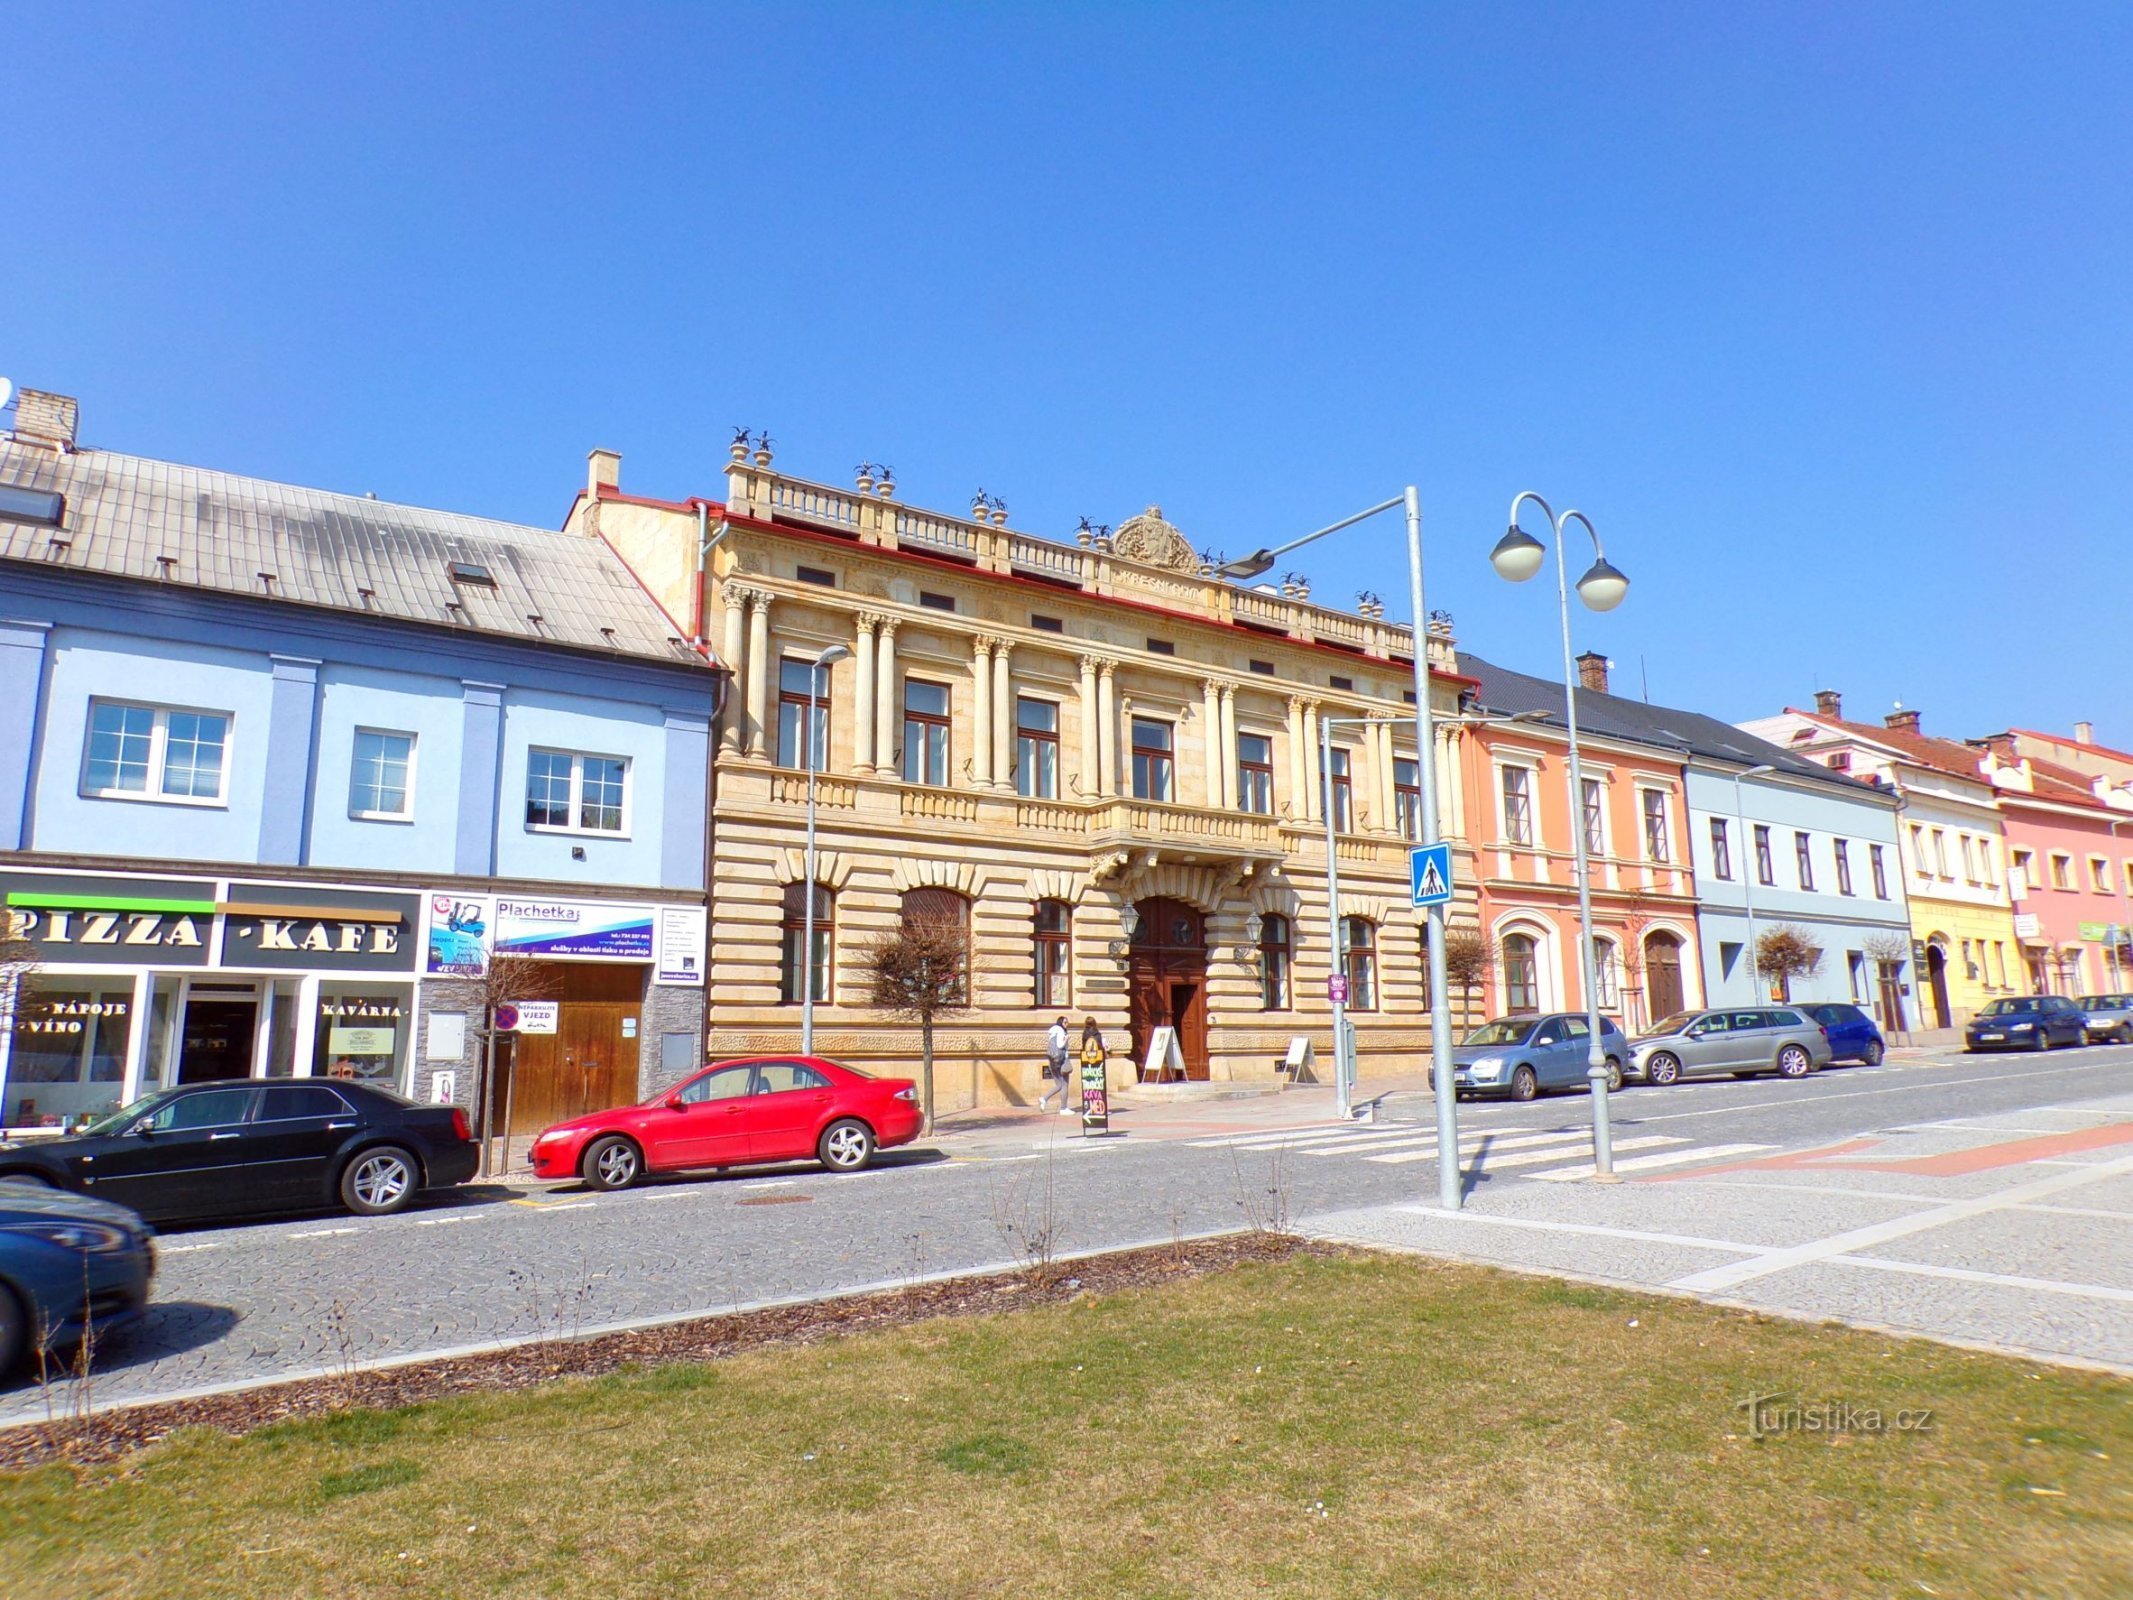 District House (Hořice, 25.3.2022/XNUMX/XNUMX)